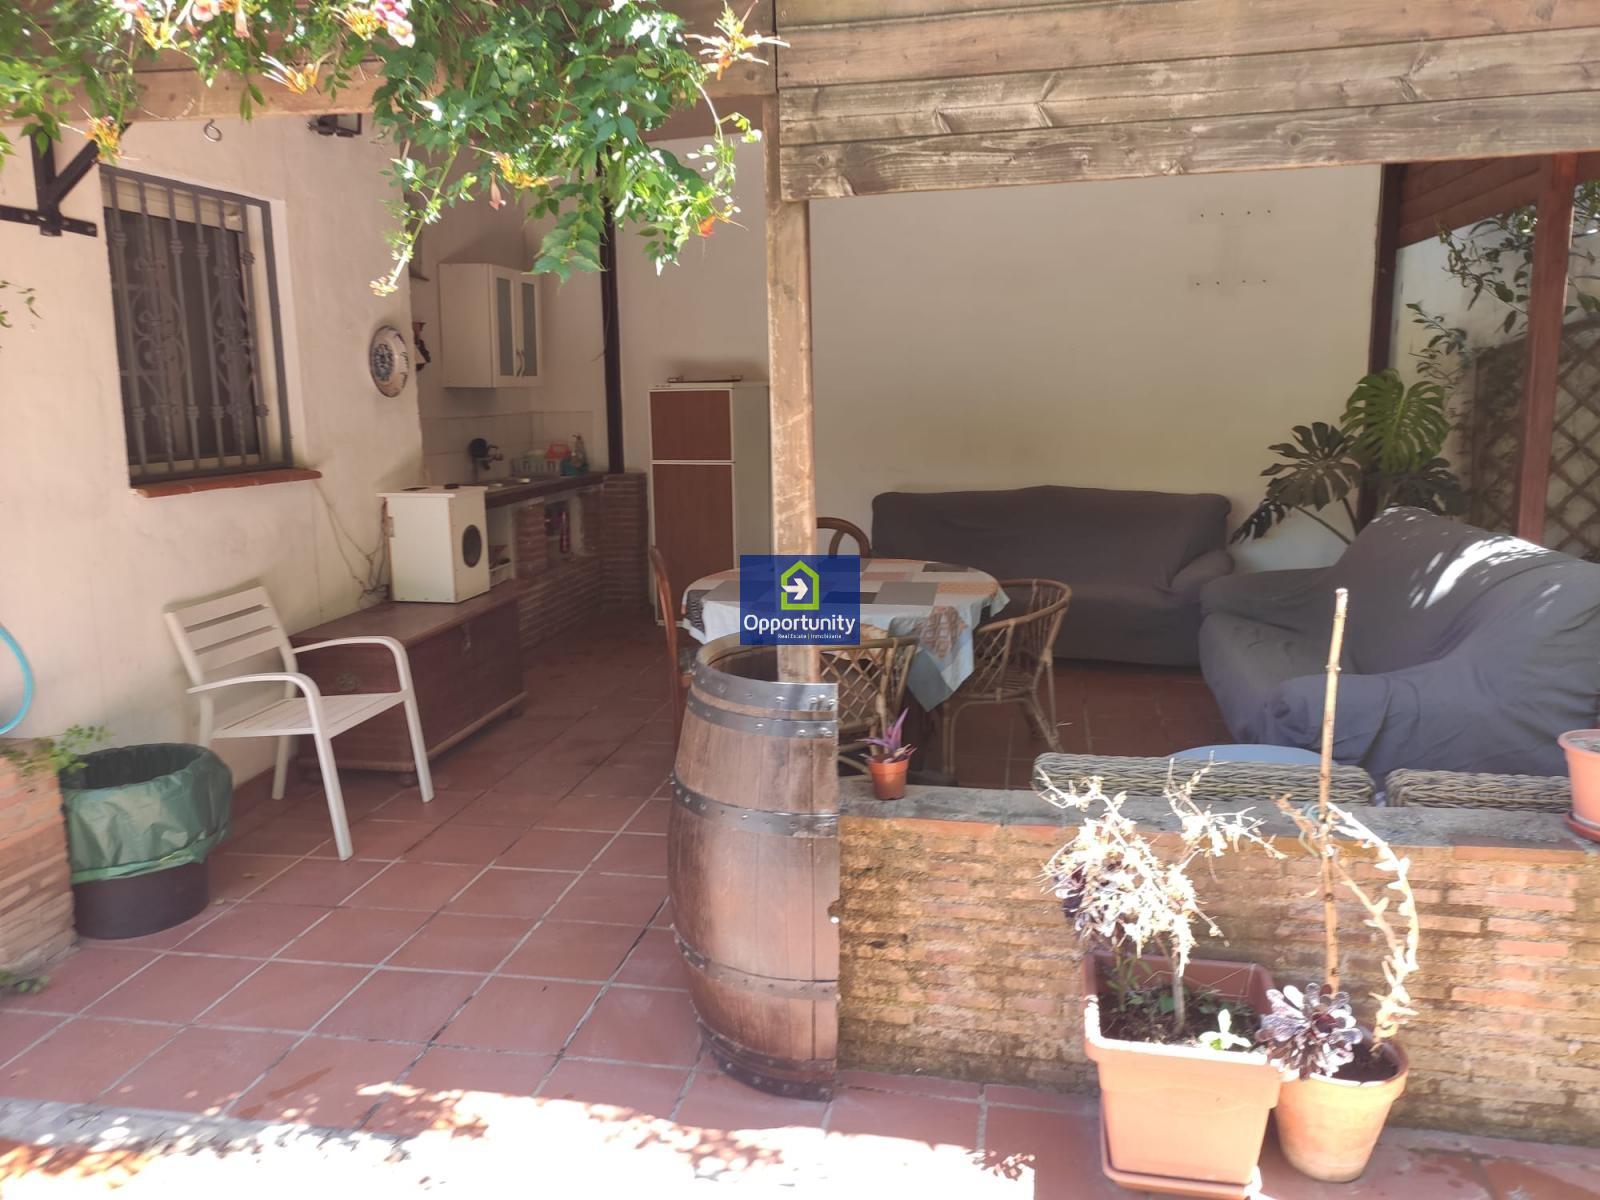 Chalet for rent in Cerrillo de Maracena (Granada), 750 €/month (Season)